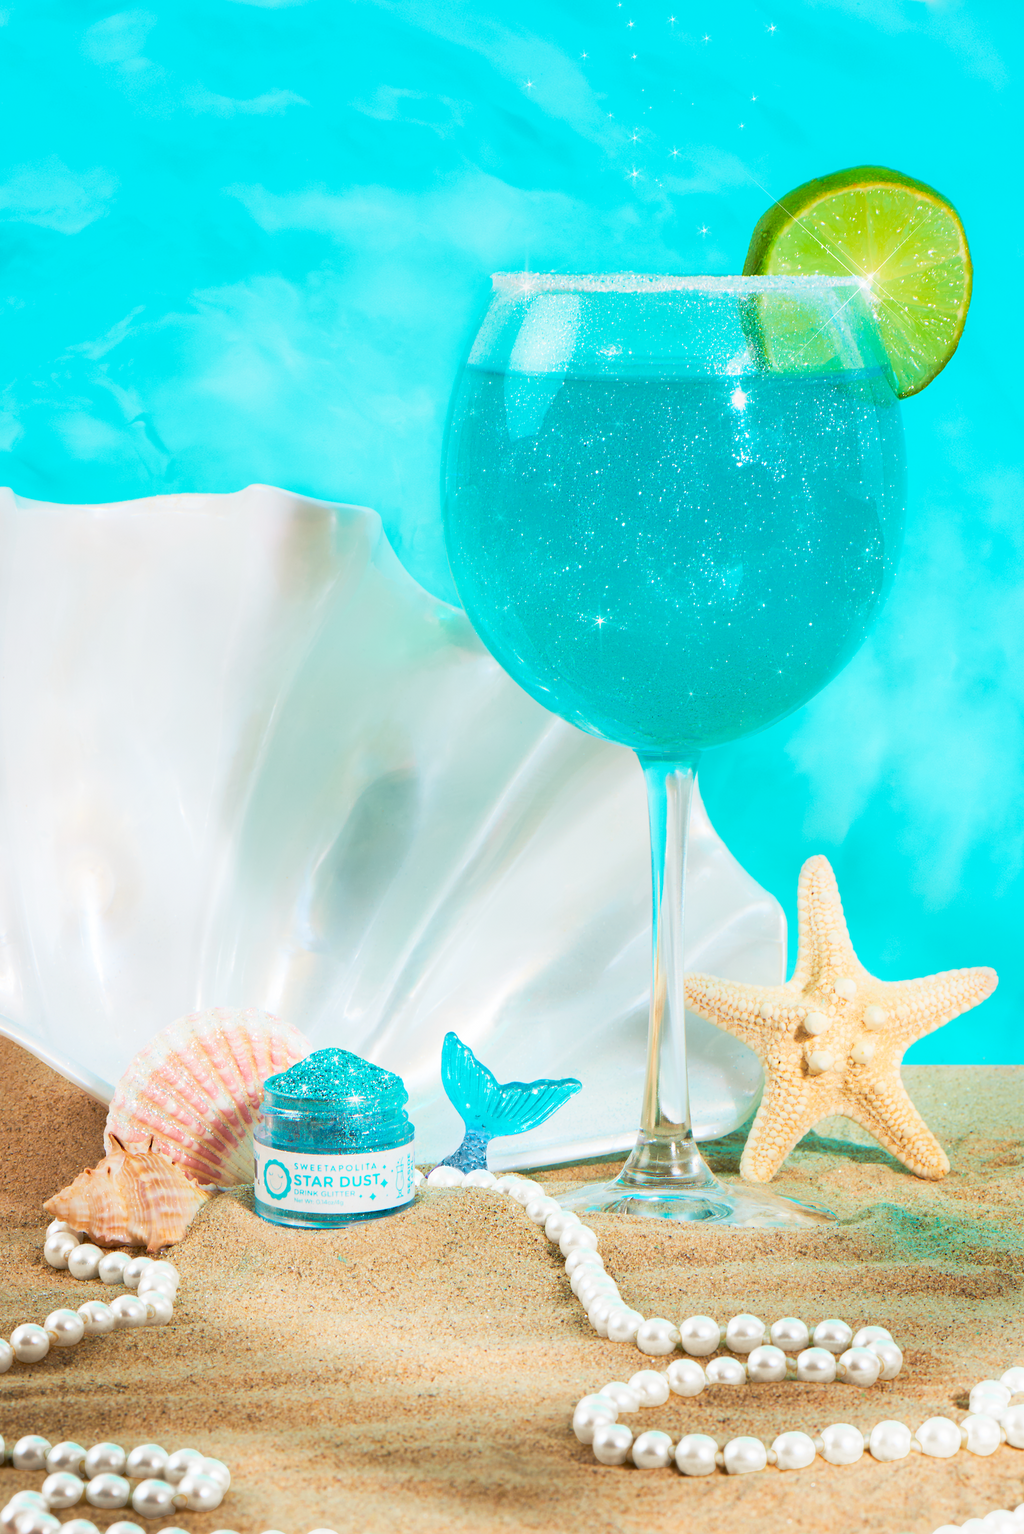 Seaside Teal  Star Dust Edible Drink Glitter - US